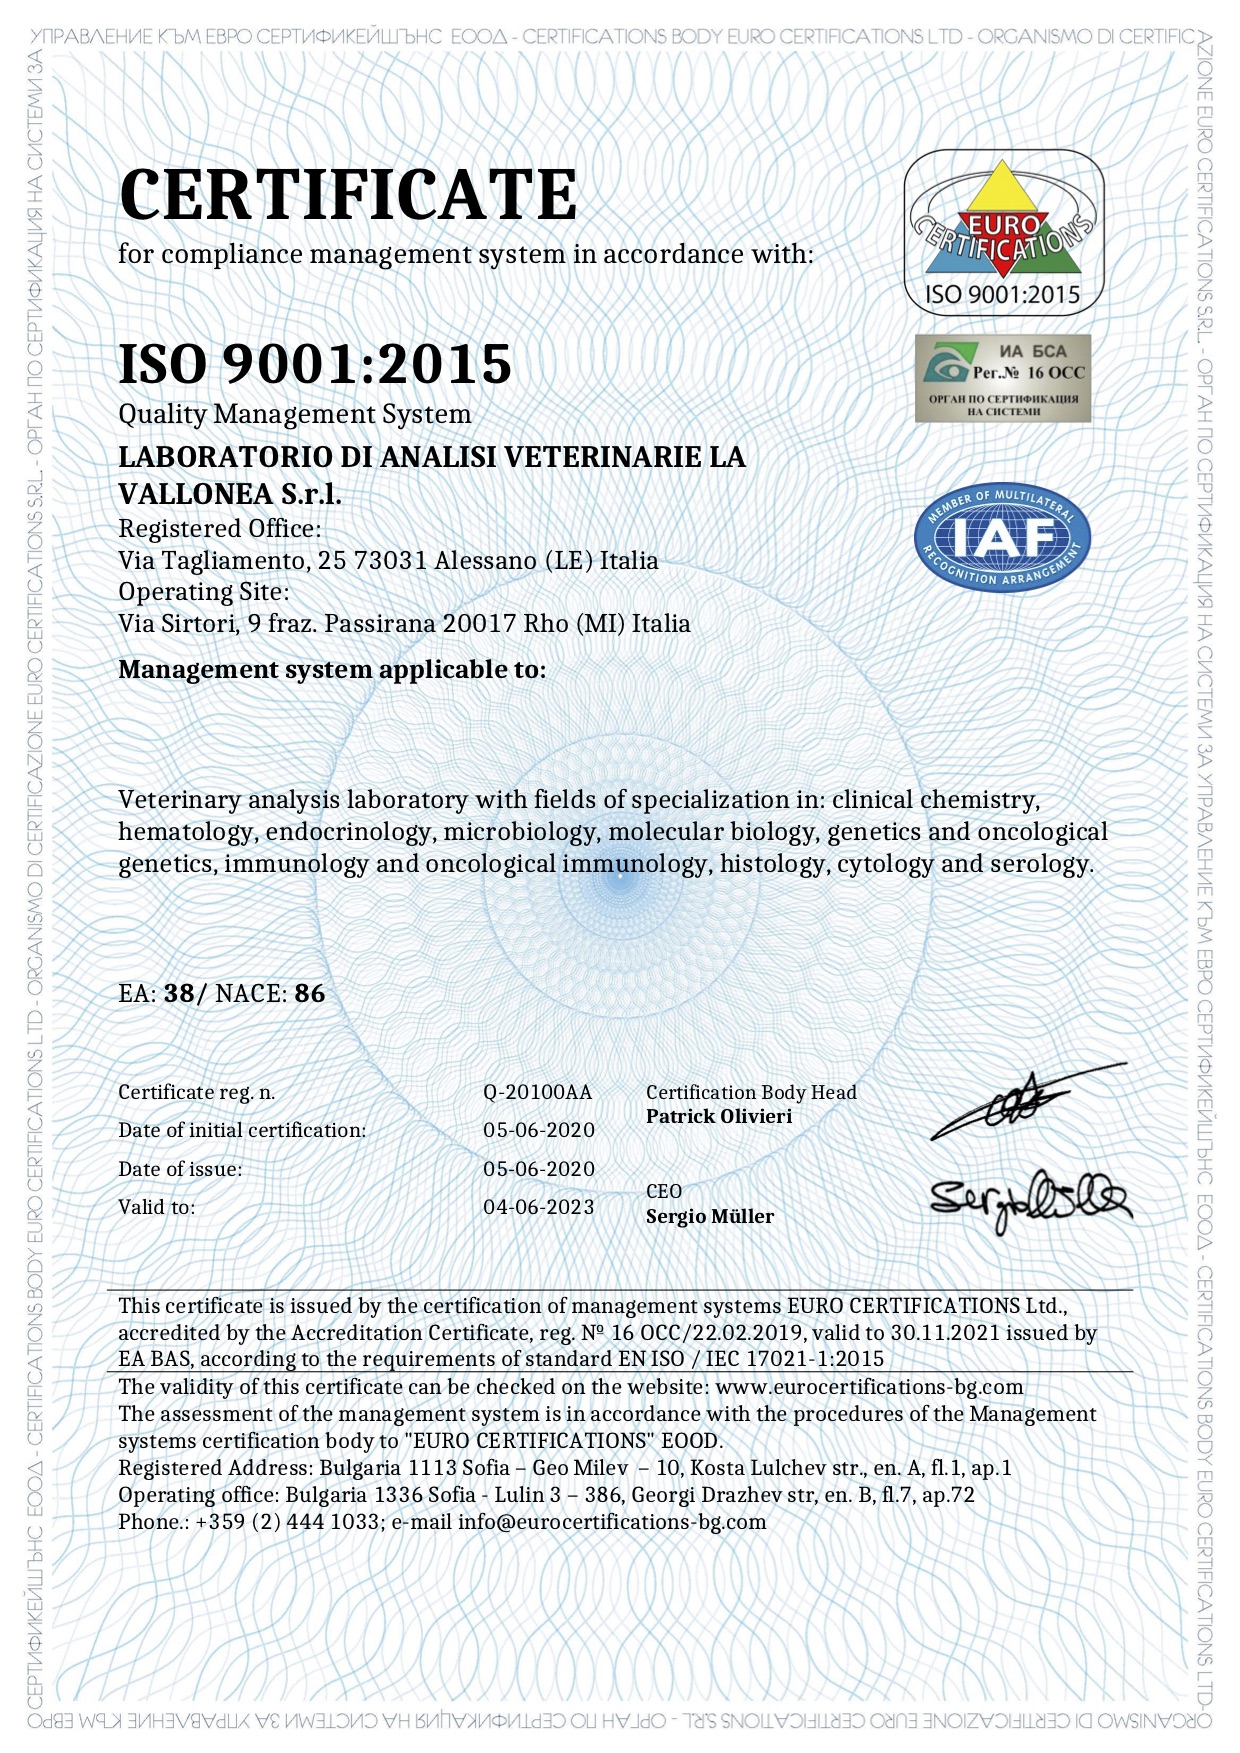 CERTIFICATO UNI EN ISO 9001:2015